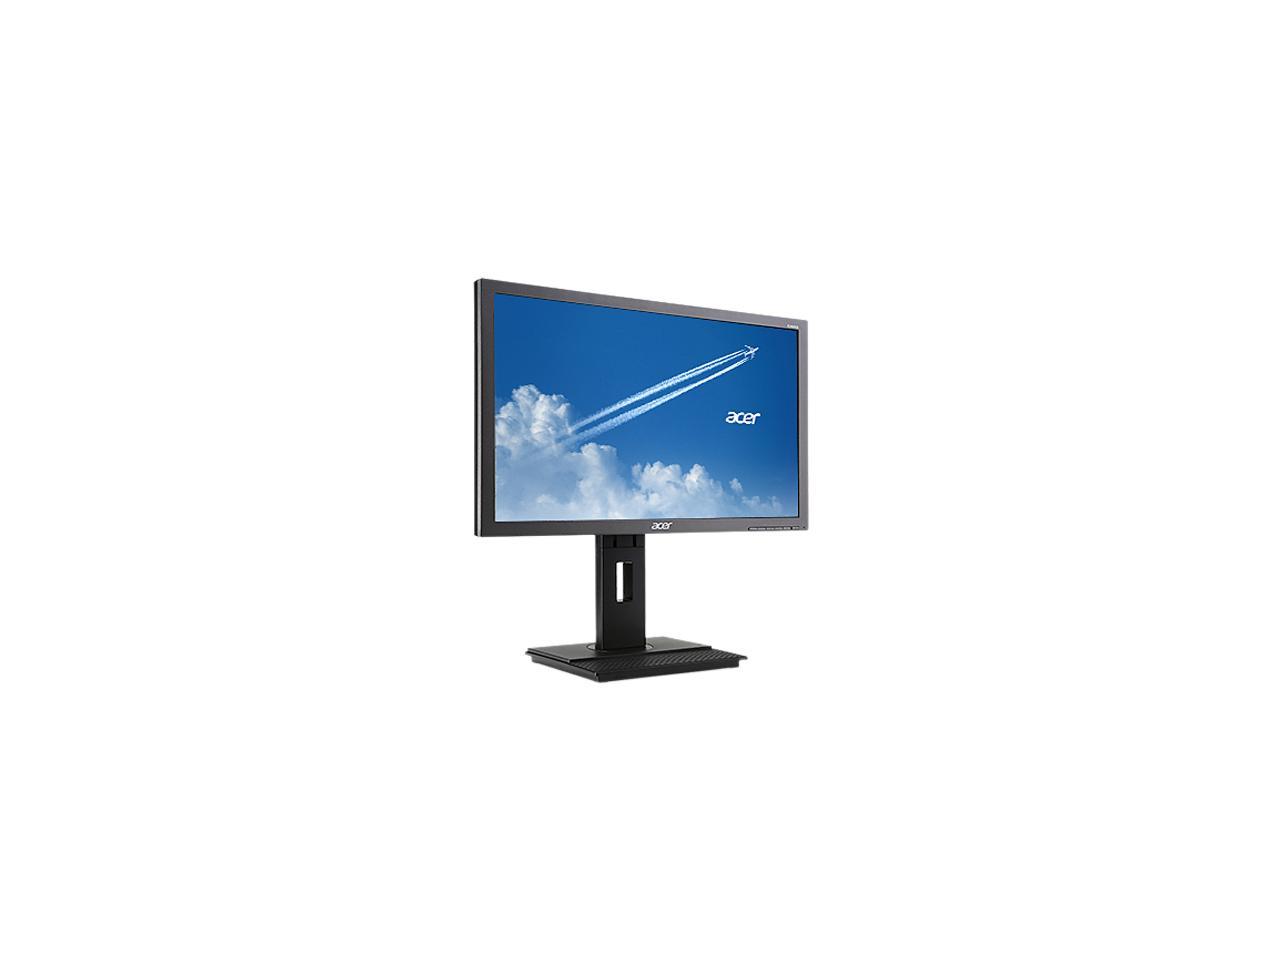 Acer B6 B226HQL ymdr 22" (Actual size 21.5") Full HD 1920 x 1080 5ms (GTG) 60Hz VGA DVI Built-in Speakers Backlit LED LCD Monitor